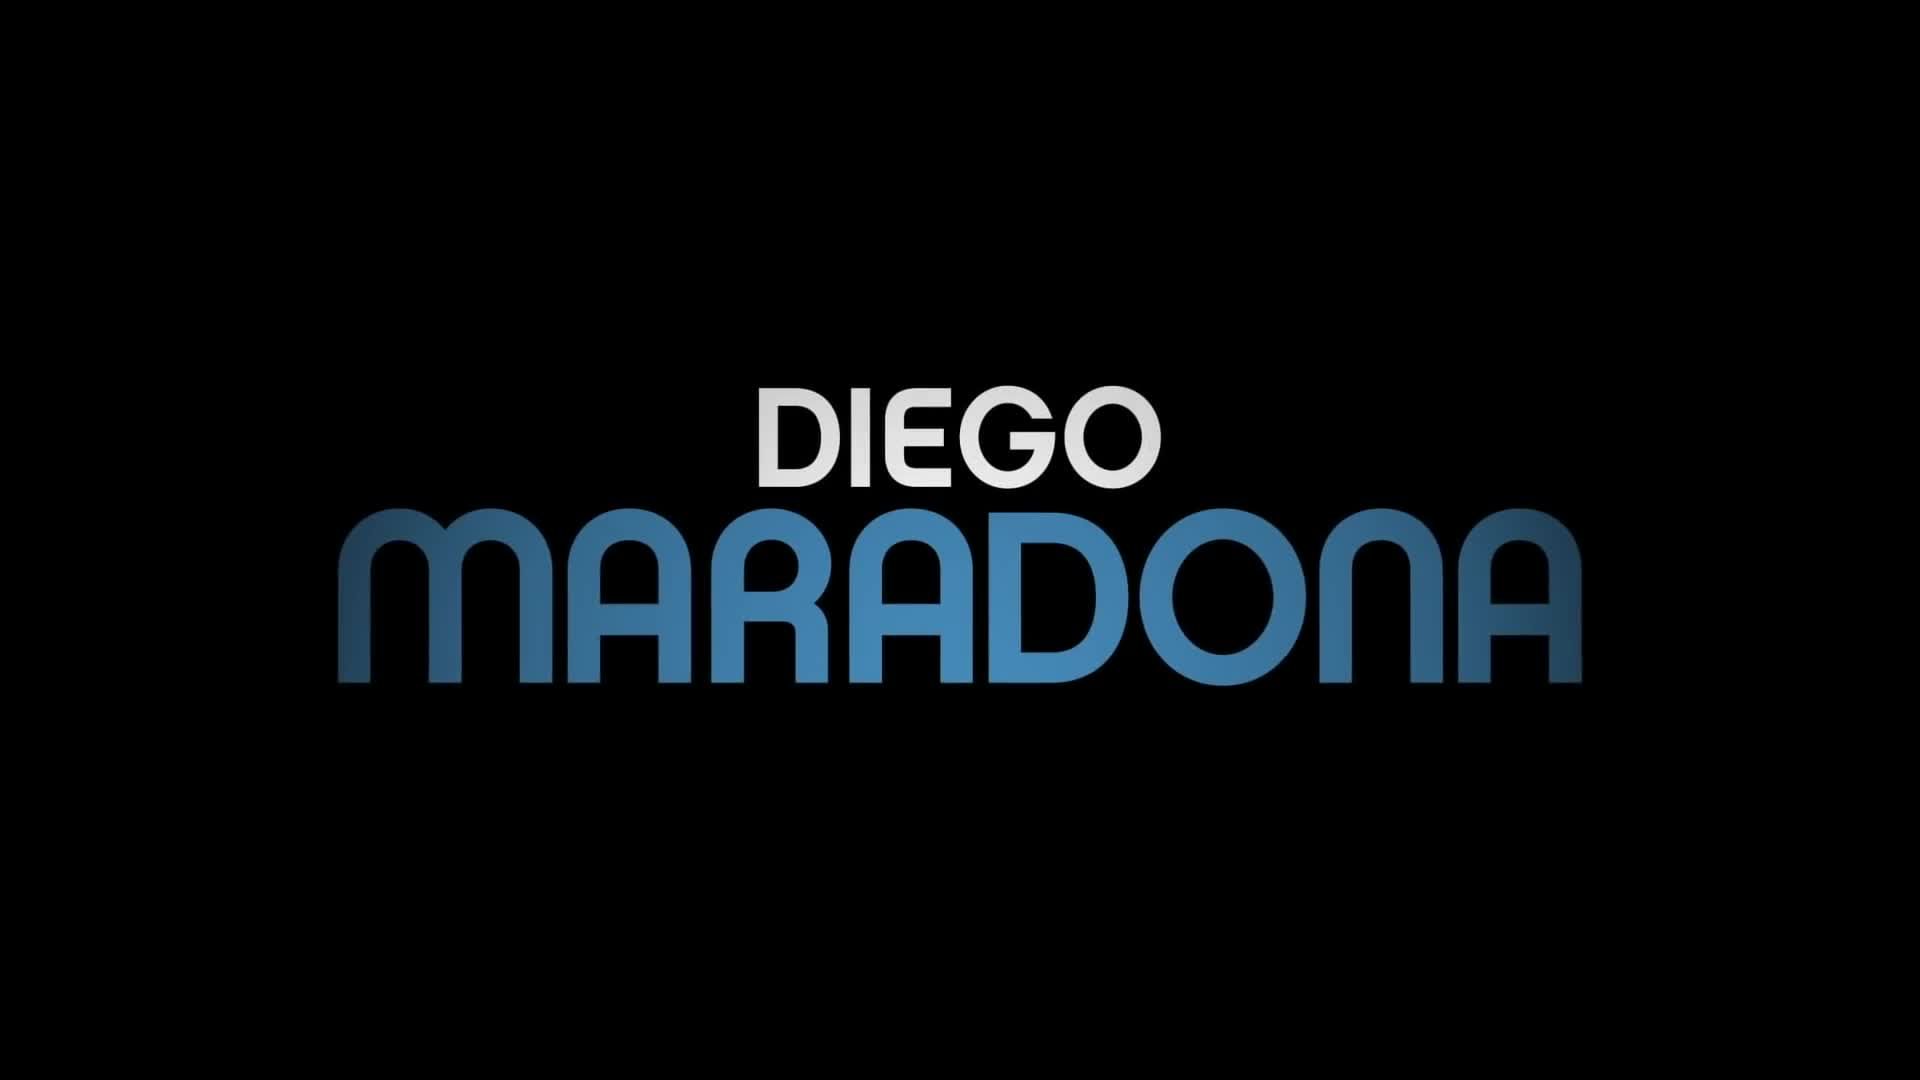 32+ Maradona Documentary Trailer Pictures